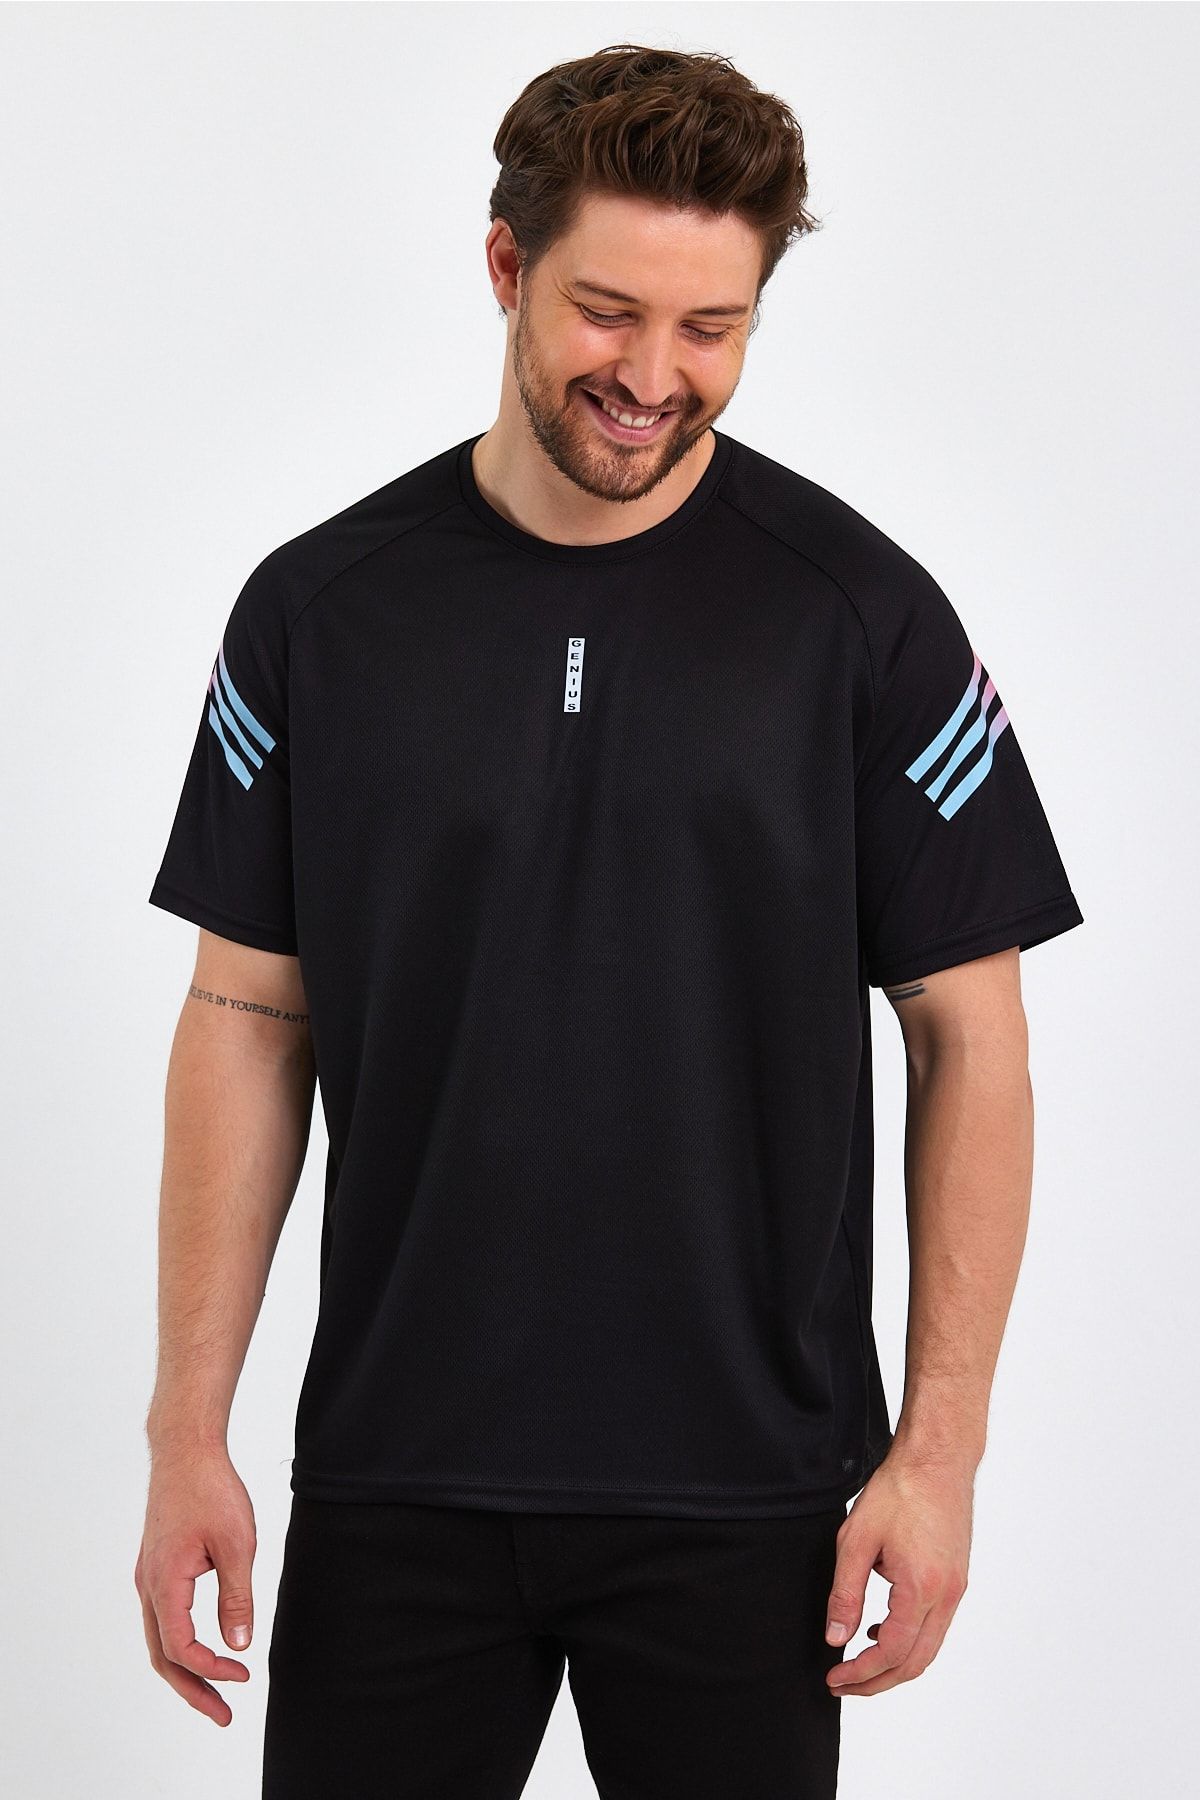 GENIUS STORE Store Erkek Spor Tişört Baskılı Fitness, Antrenman Fit T-shirt